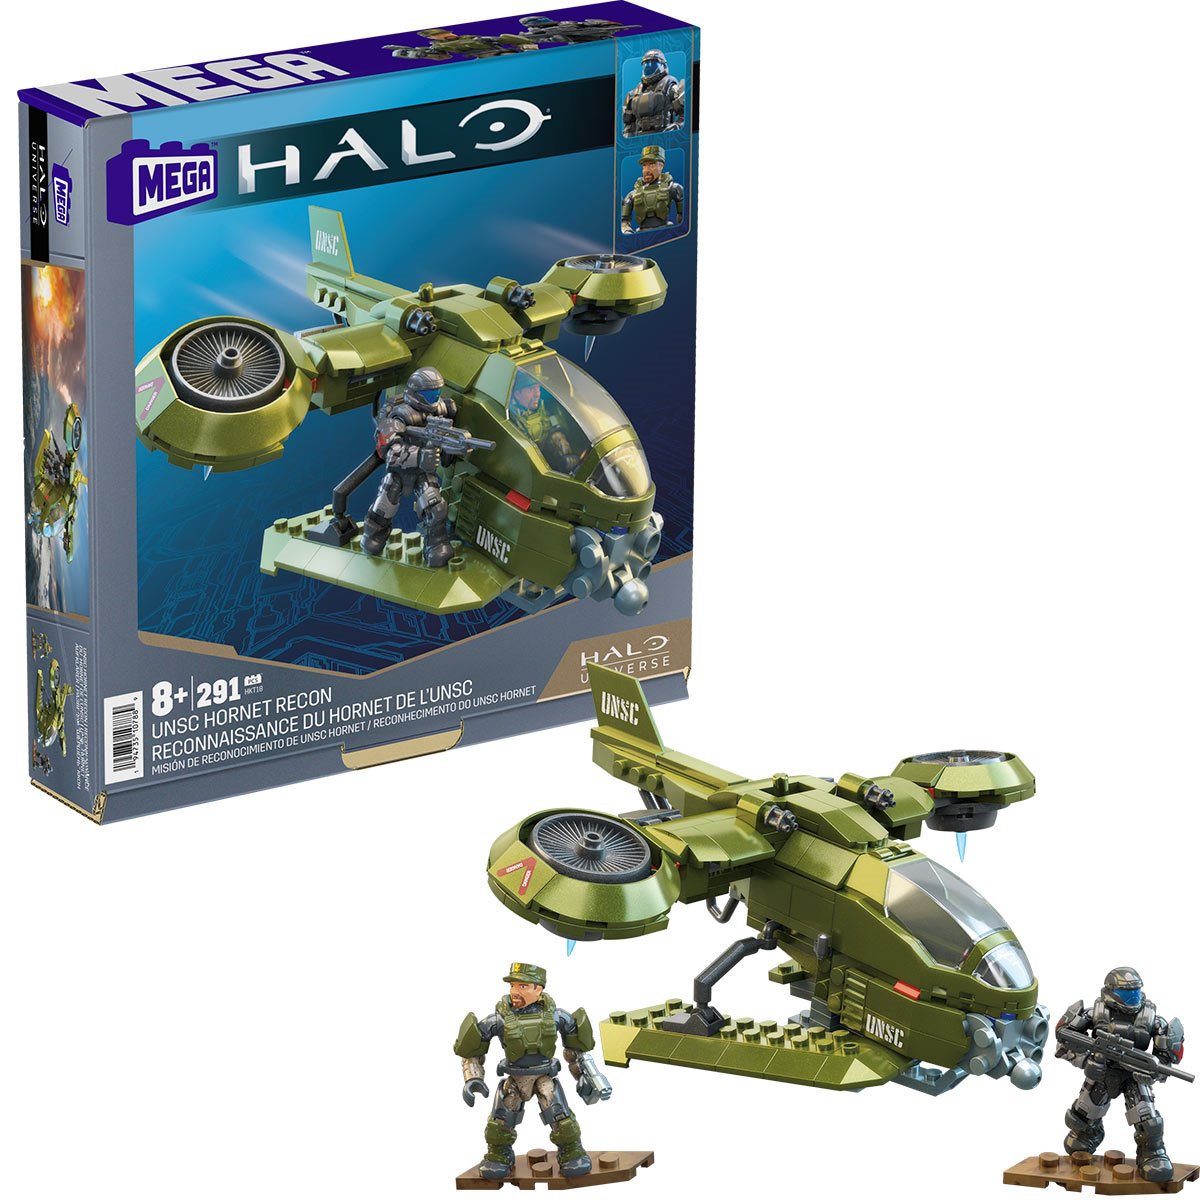 Halo Mega Construx Heroes Series 18 Micro Figure Case of 21